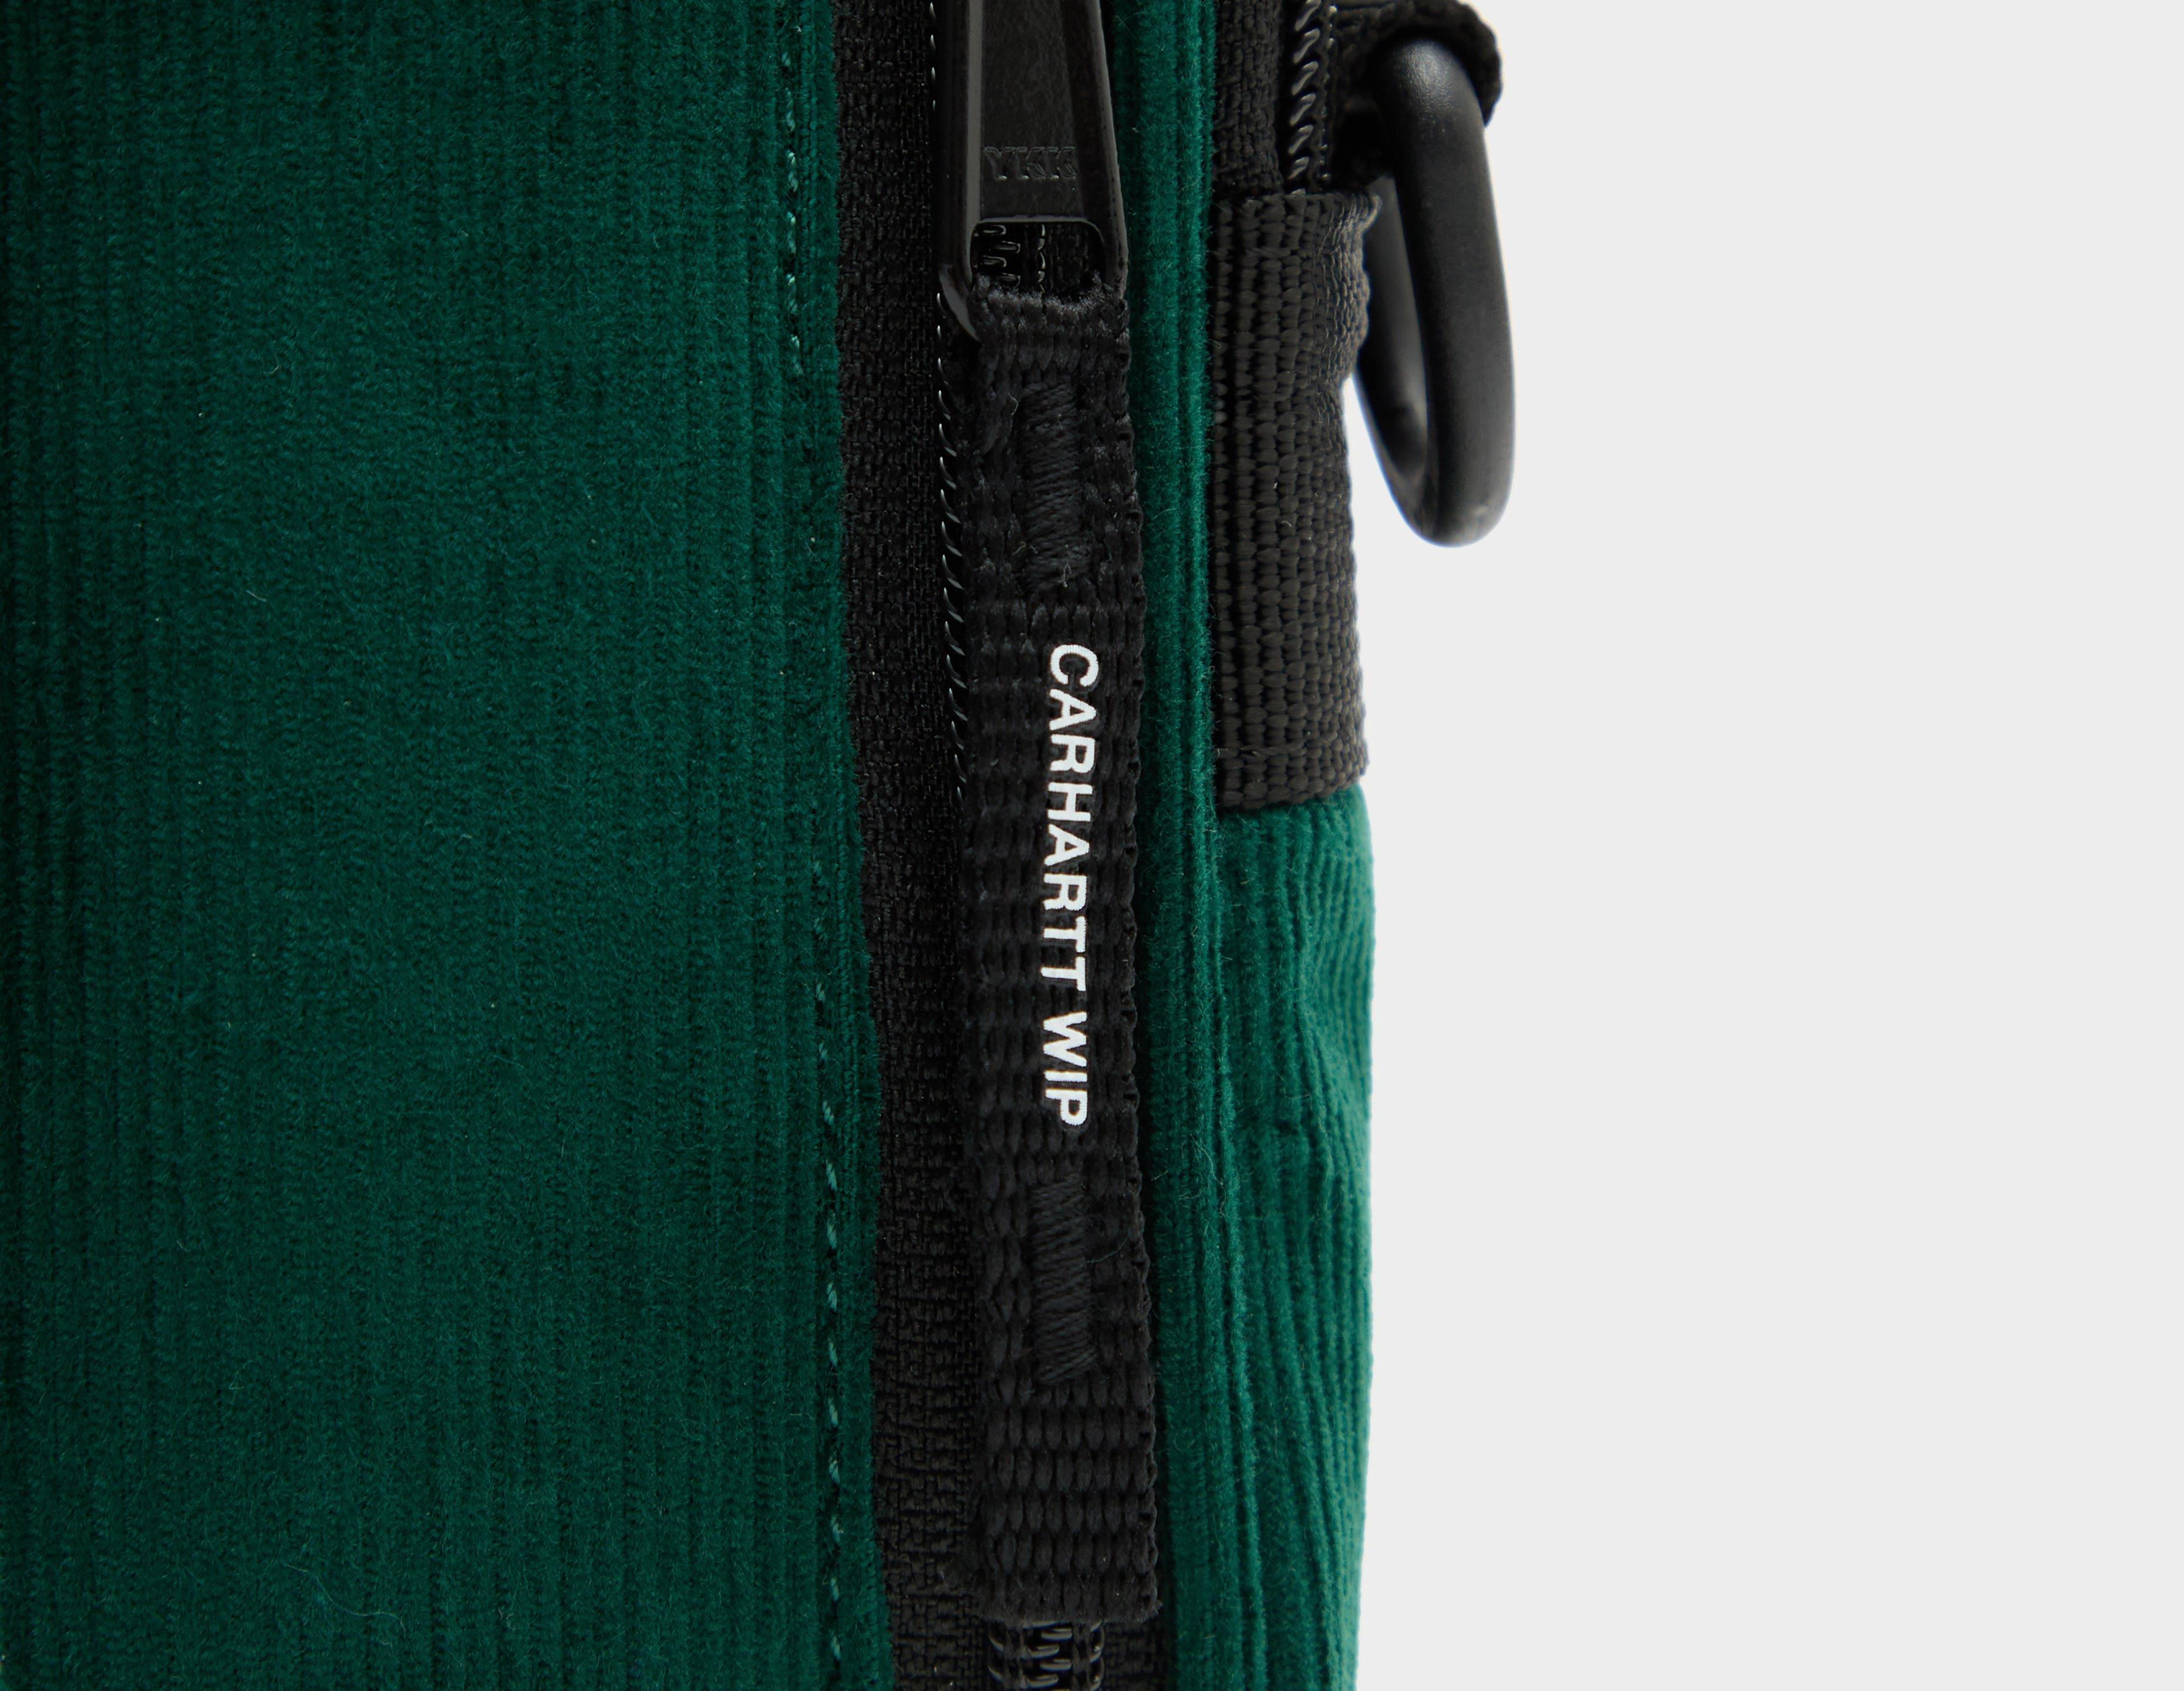 Carhartt Wip Essentials Cord Bag Tasche 1,7 L (black